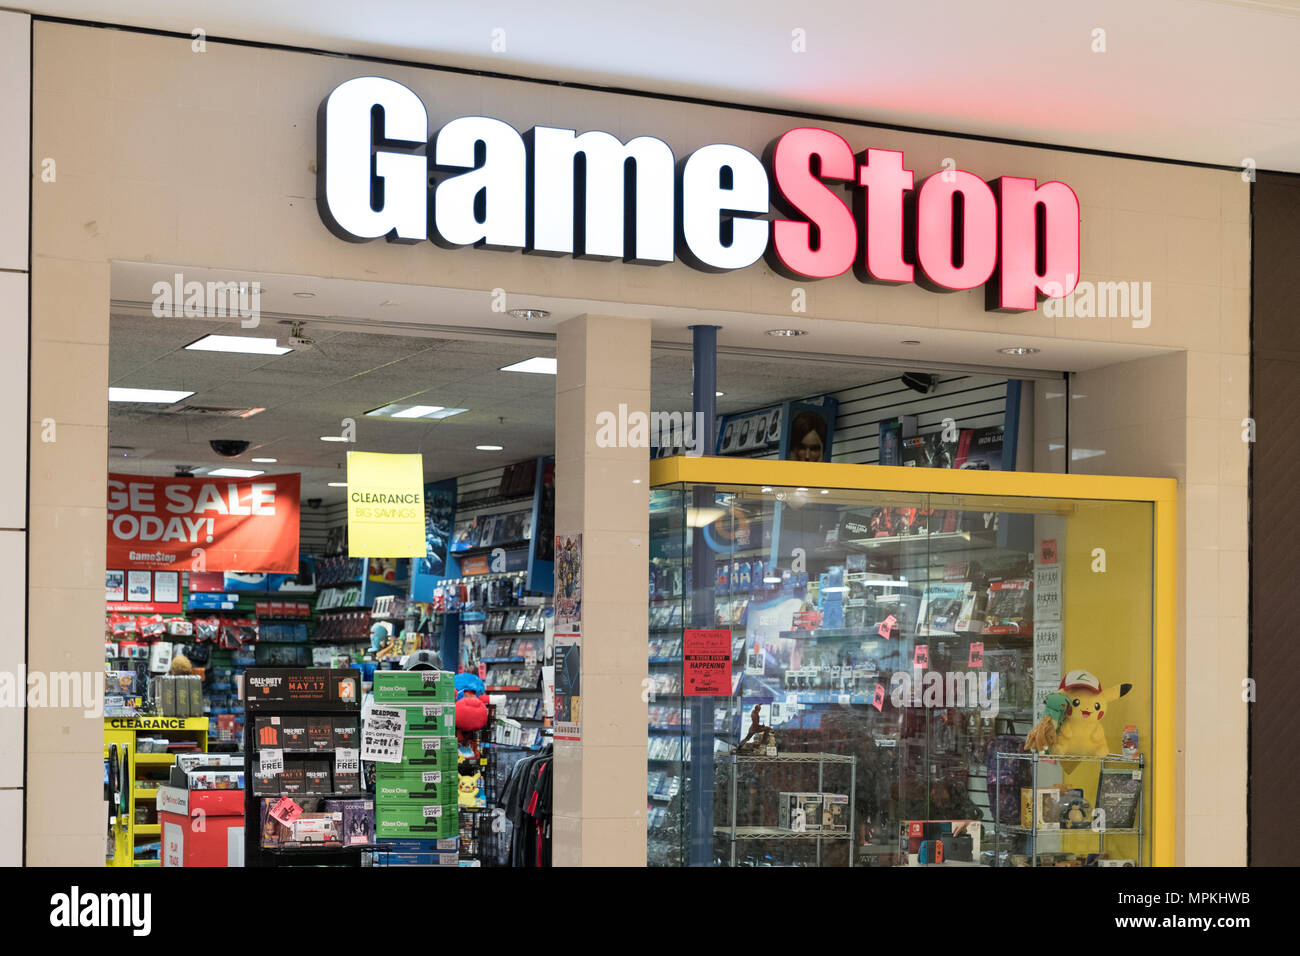 Gamestop Stock Photo